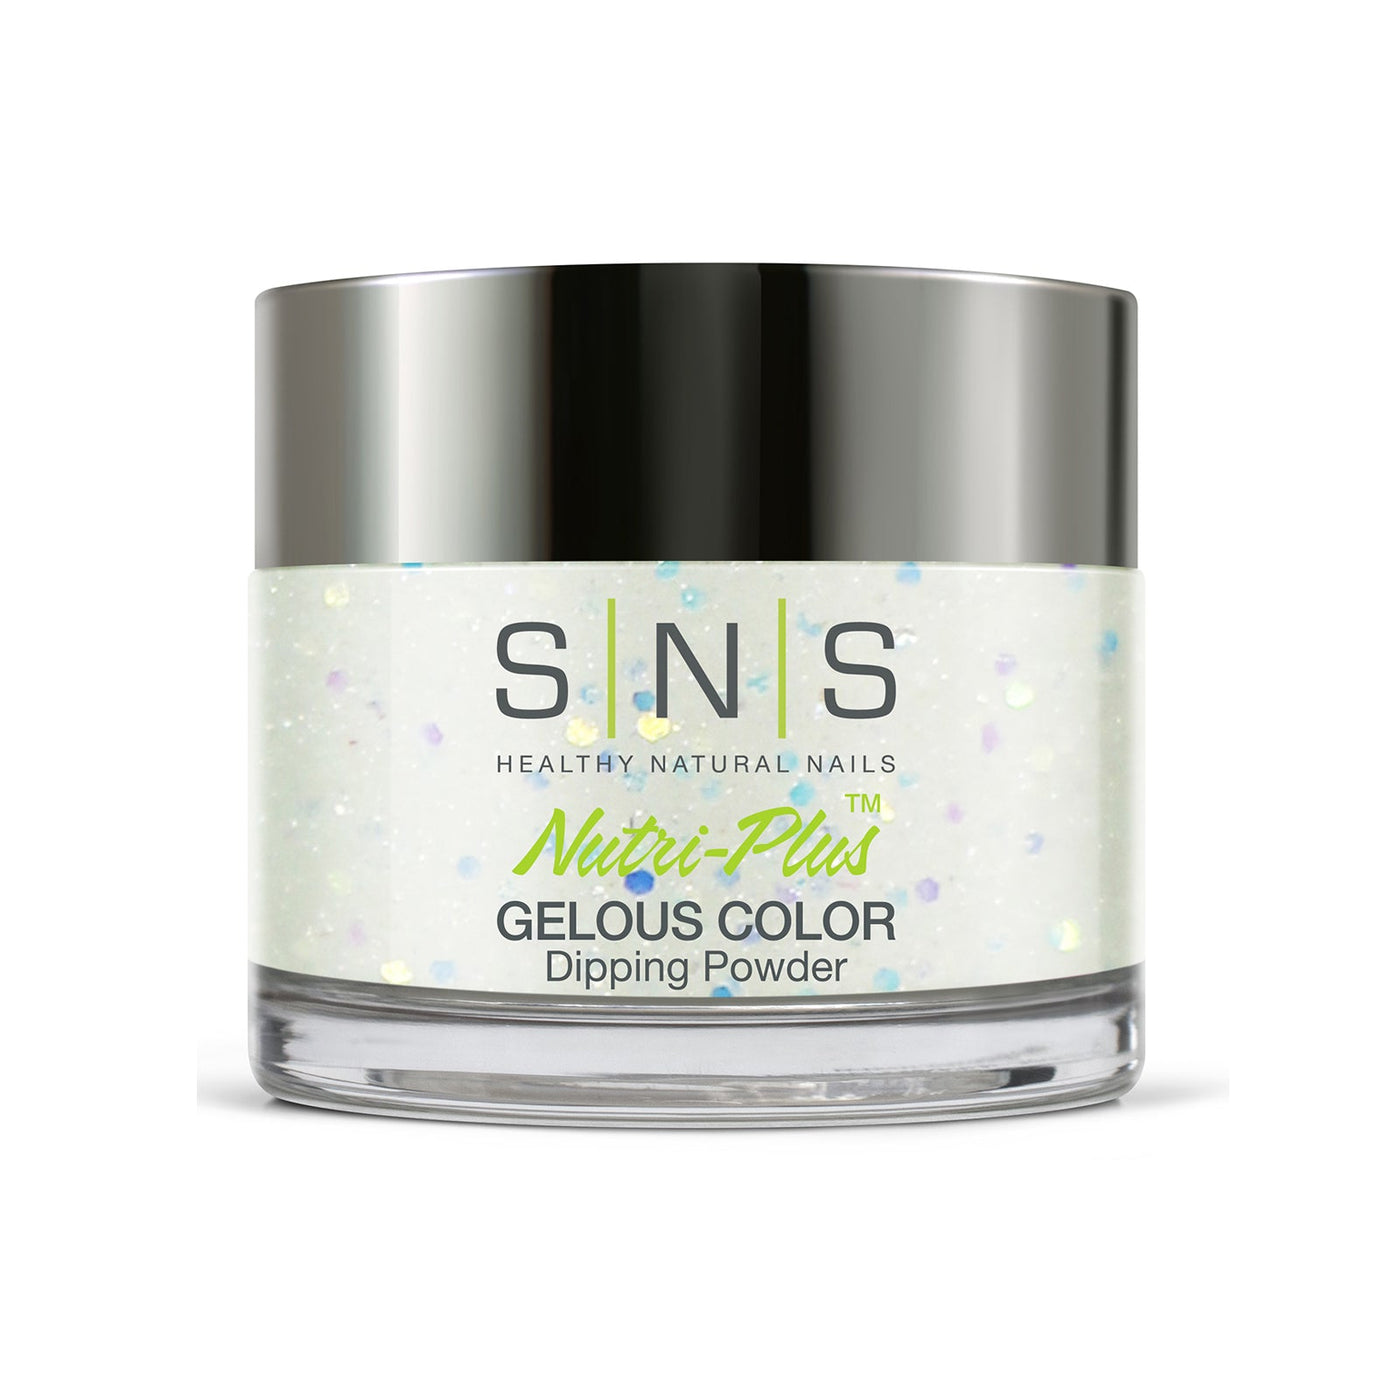 SNS Gelous Color Dipping Powder DW01 Amalfi Coast (43g) packaging